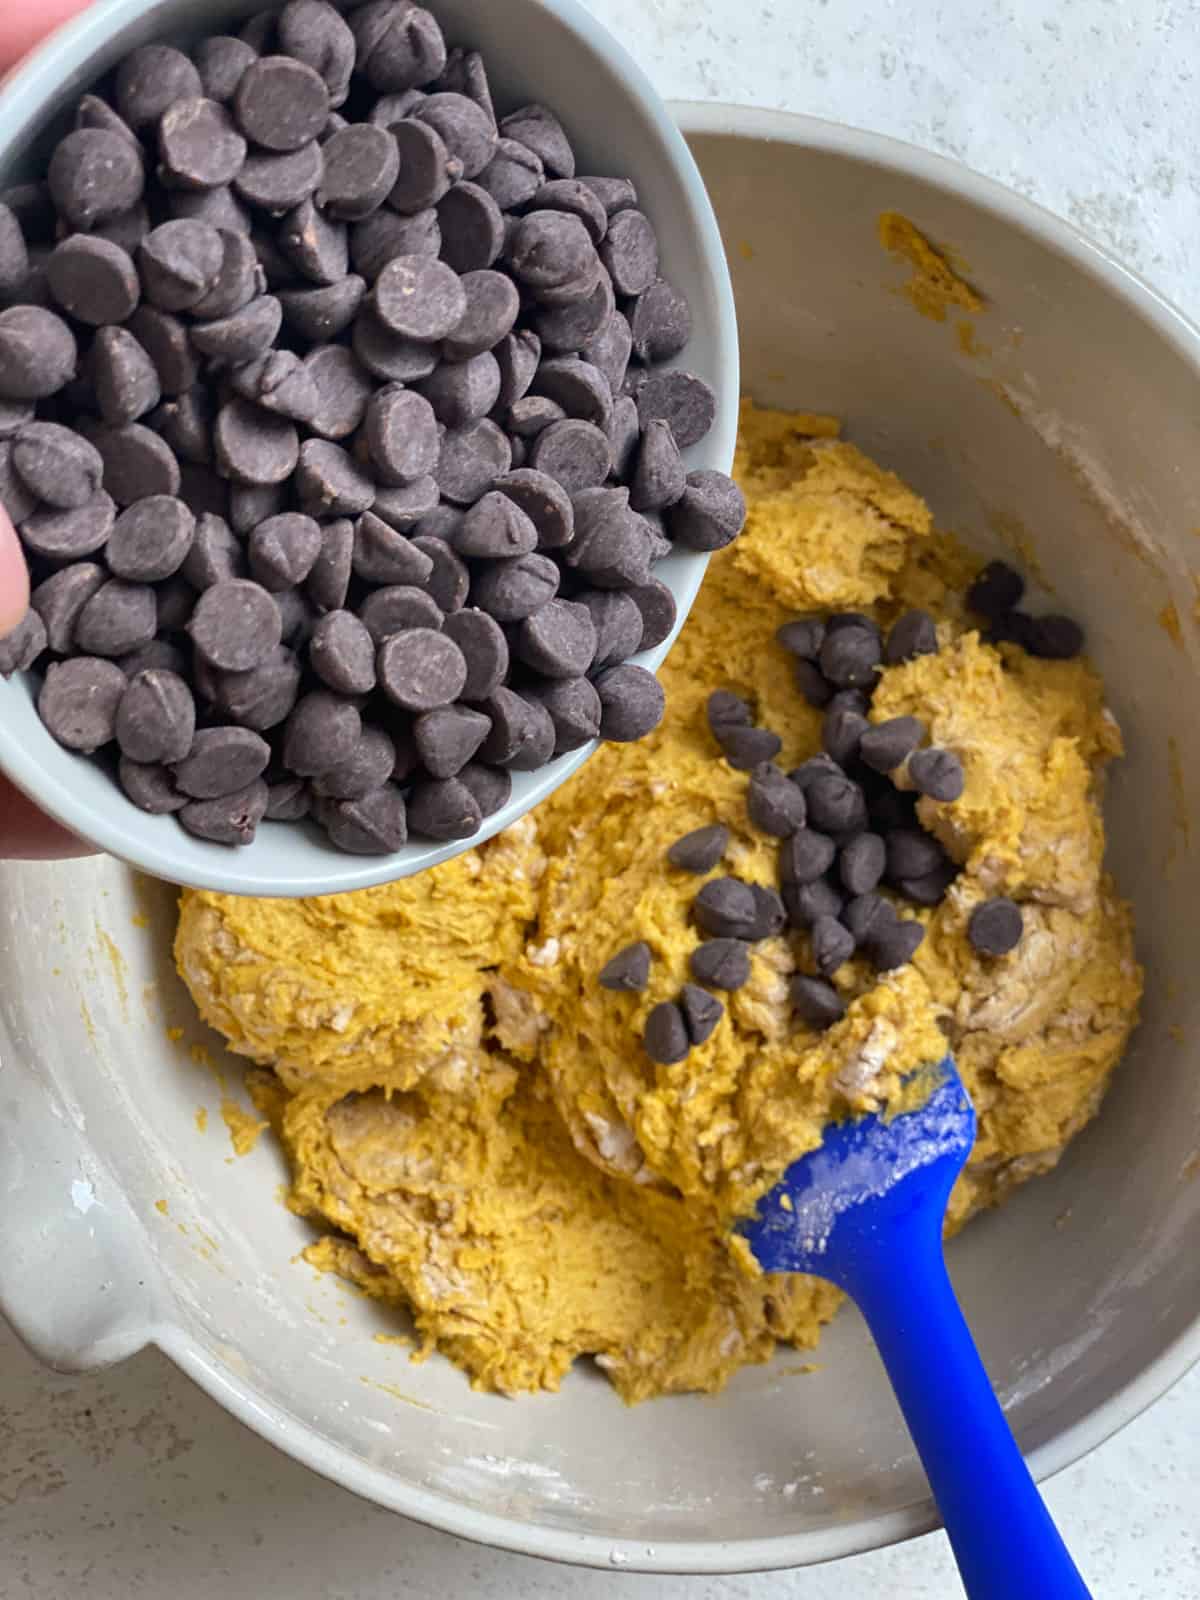 process of adding vegan chocolate chips to pumpkin mixture